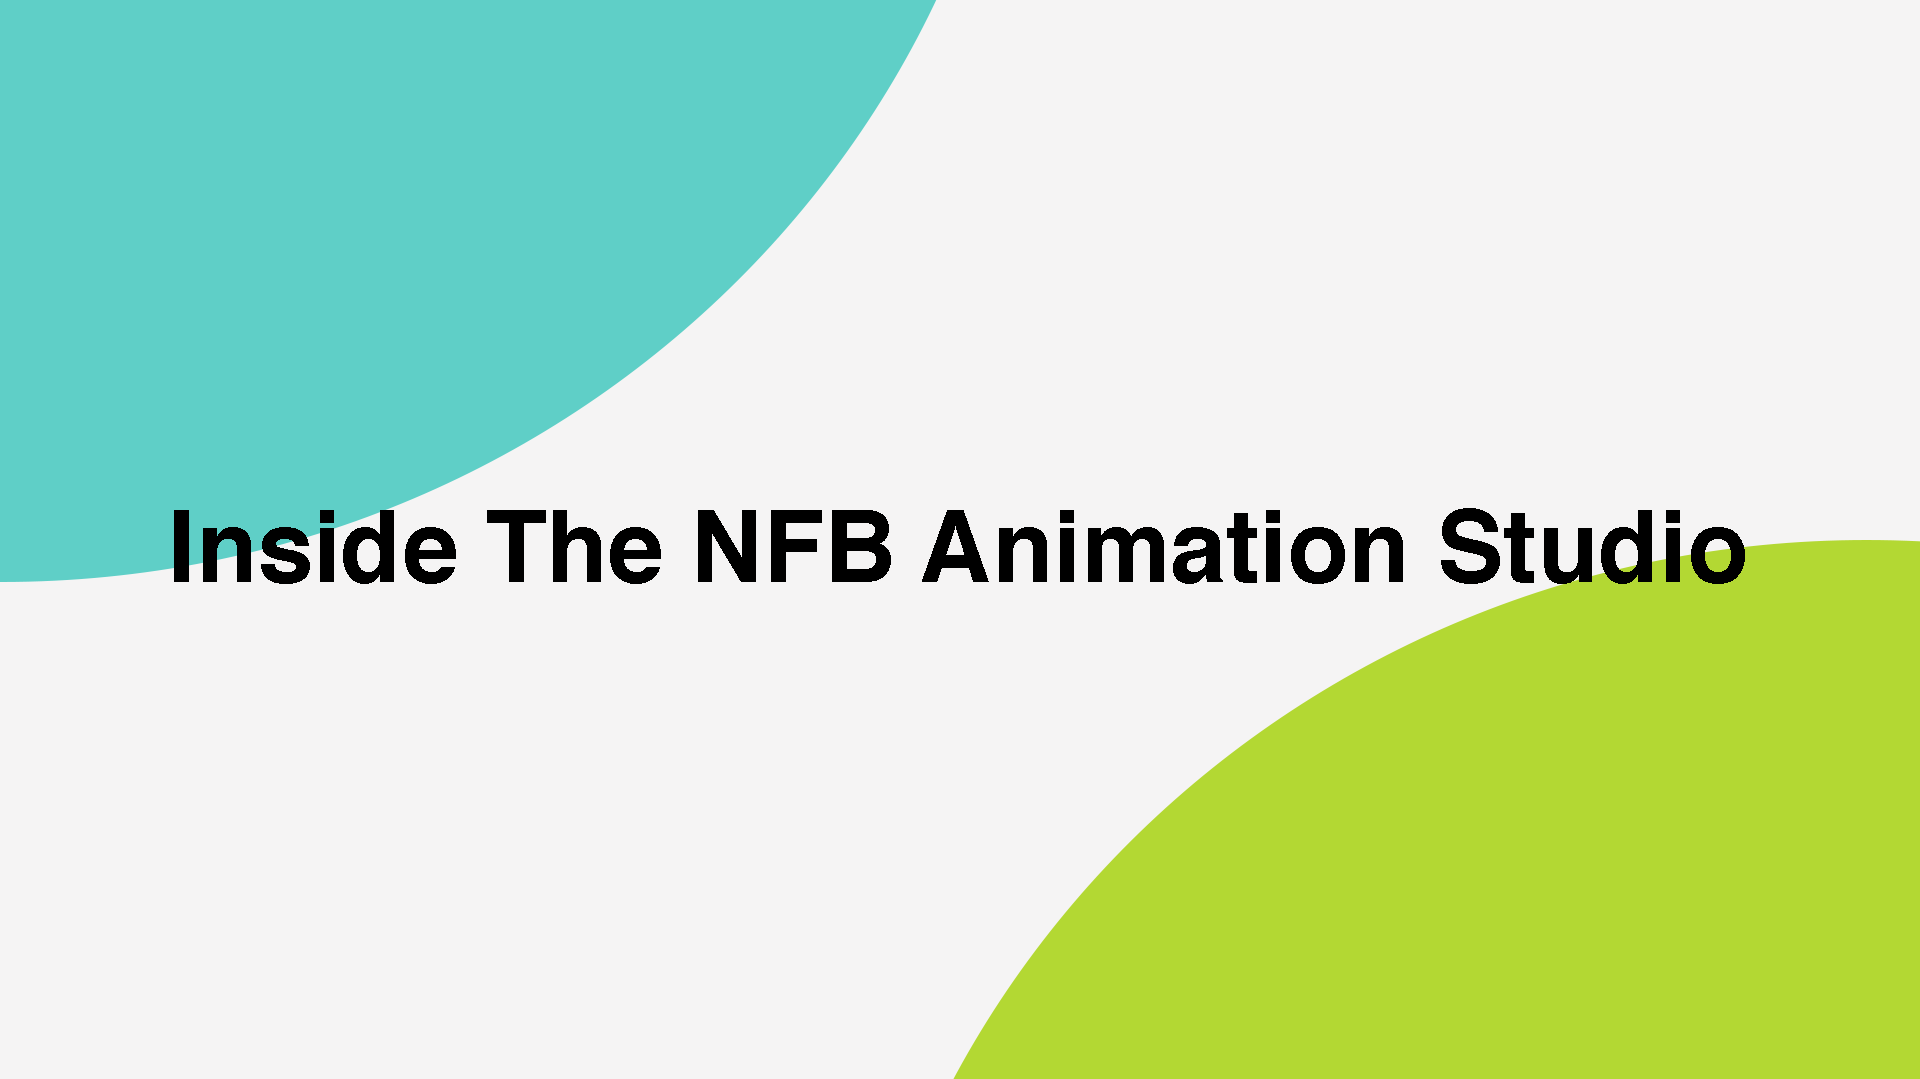 Inside the NFB Animation Studio